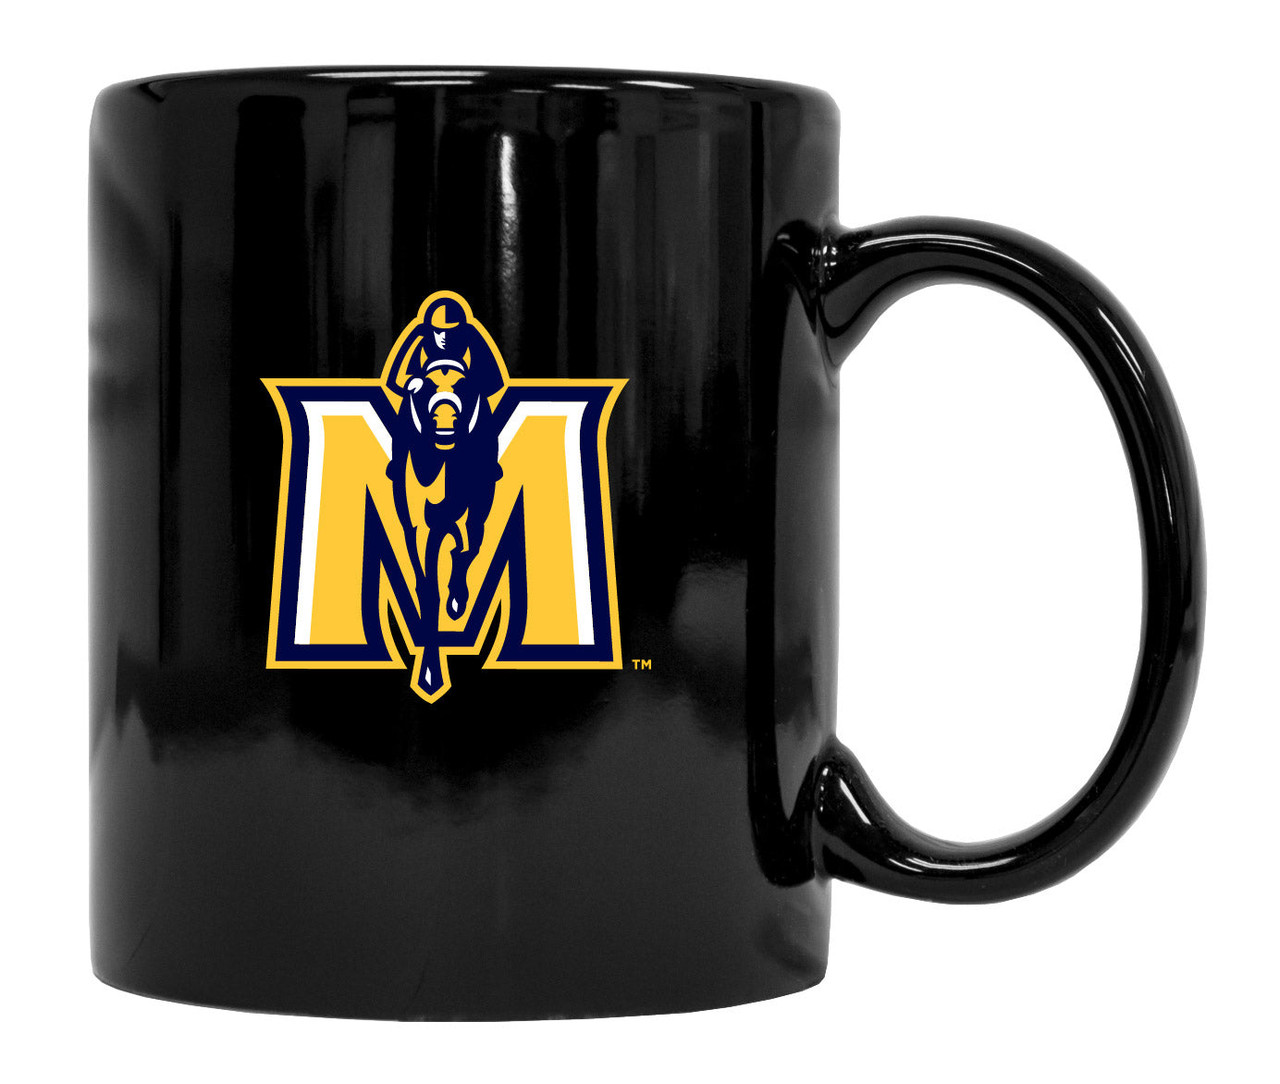 Murray State University Black Ceramic Coffee Mug 2-Pack (Black).